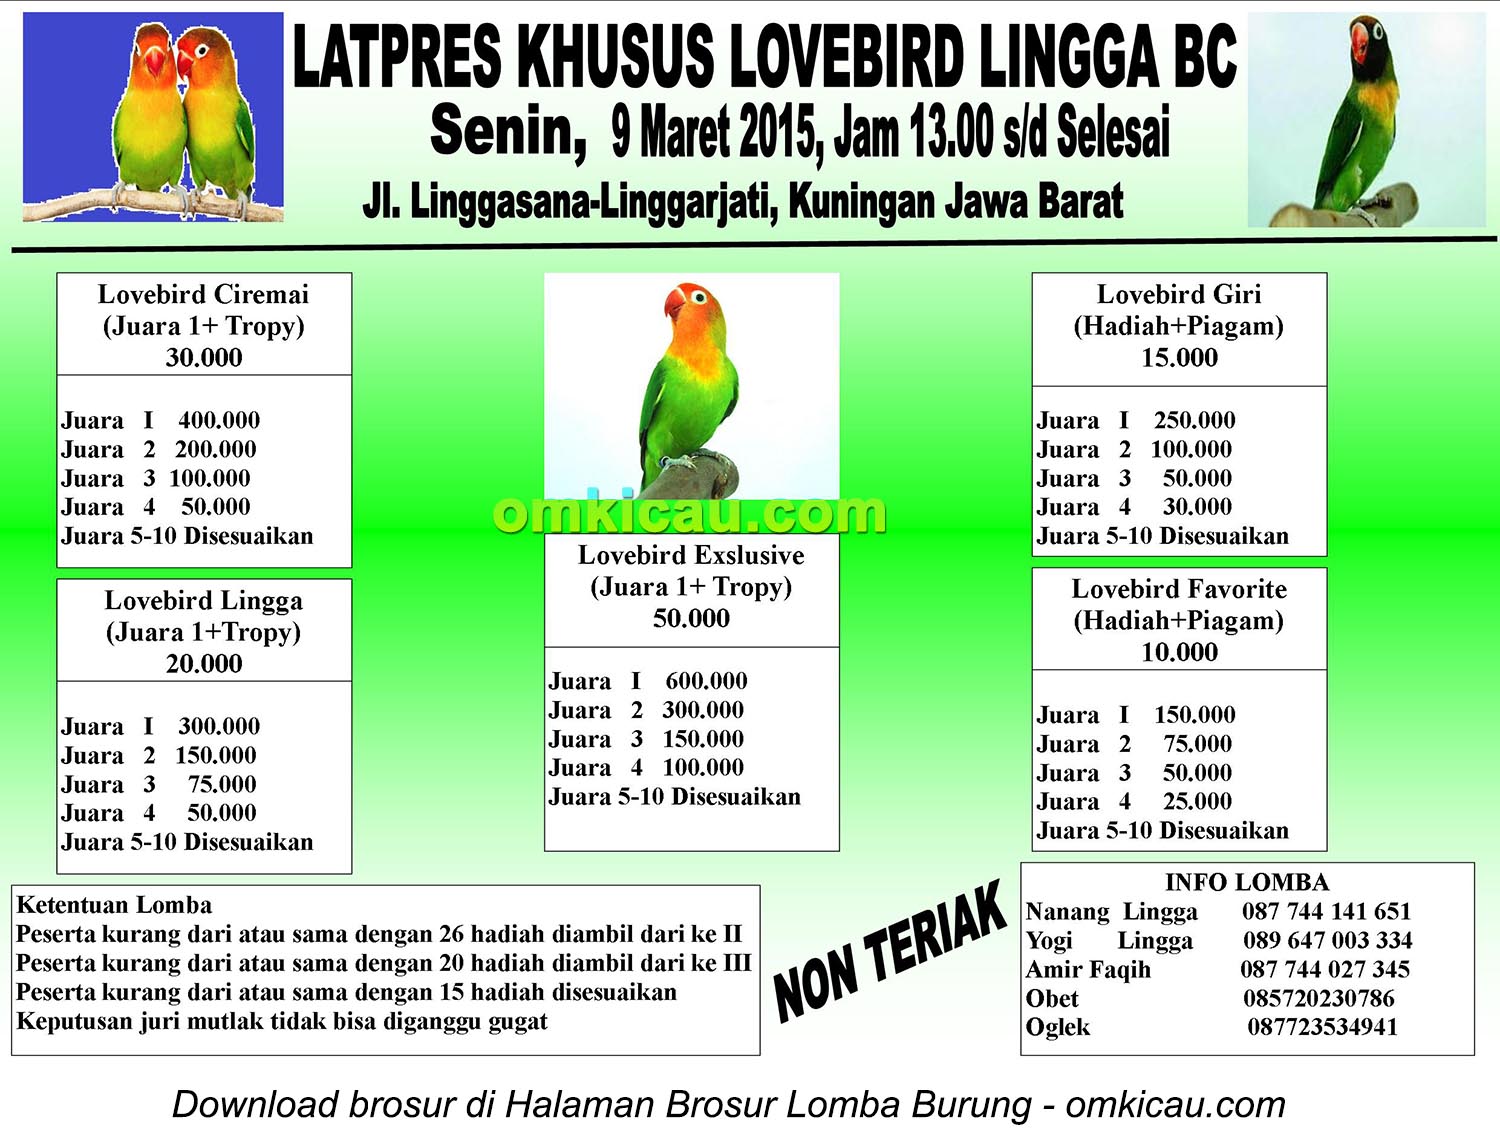 Brosur Latpres Khusus Lovebird Lingga BC, Kuningan, 9 Maret 2015